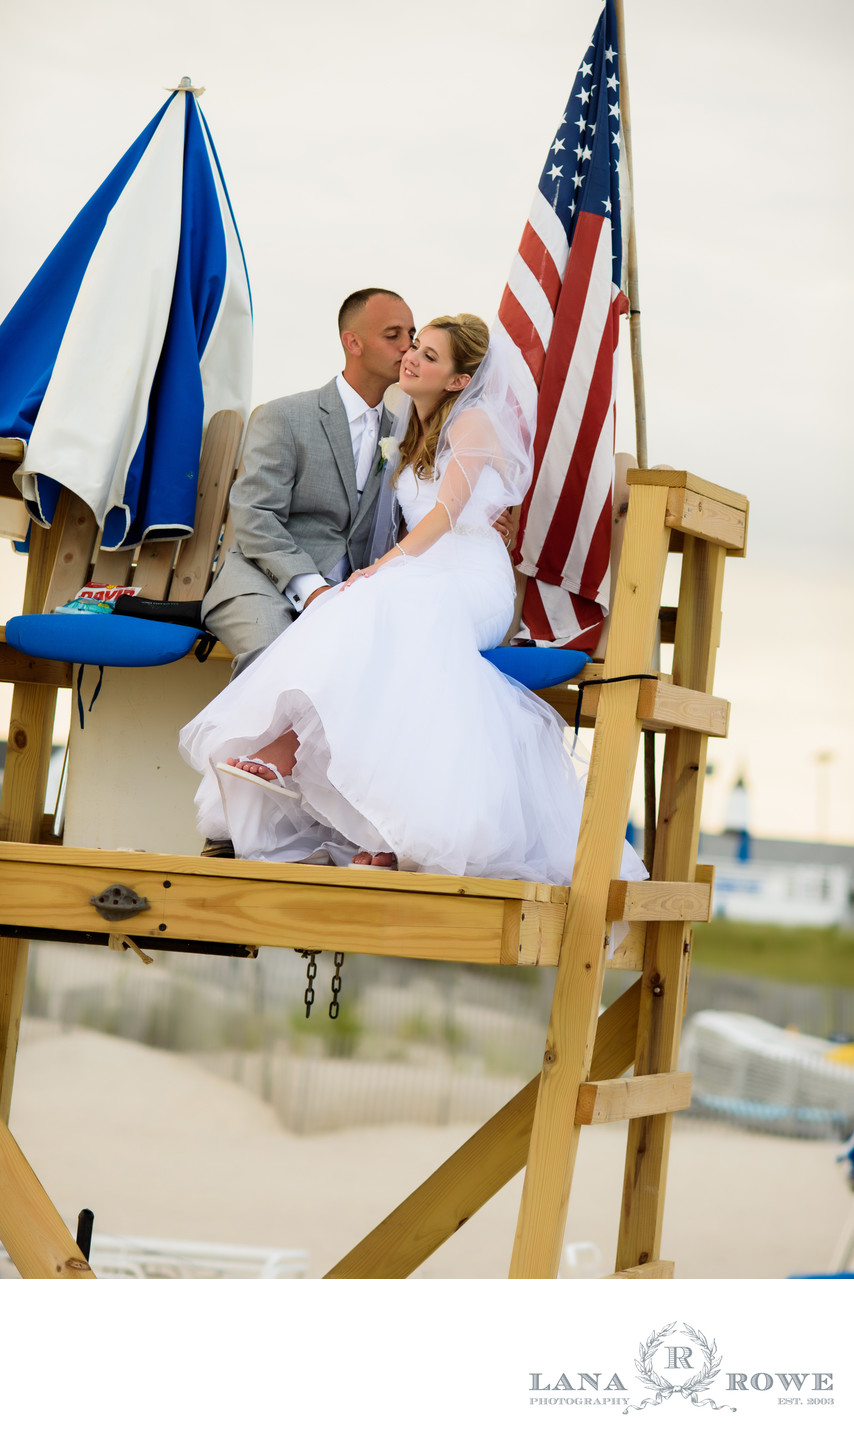 Oceanbleu, Westhampton  bride and groom lifeguard chair